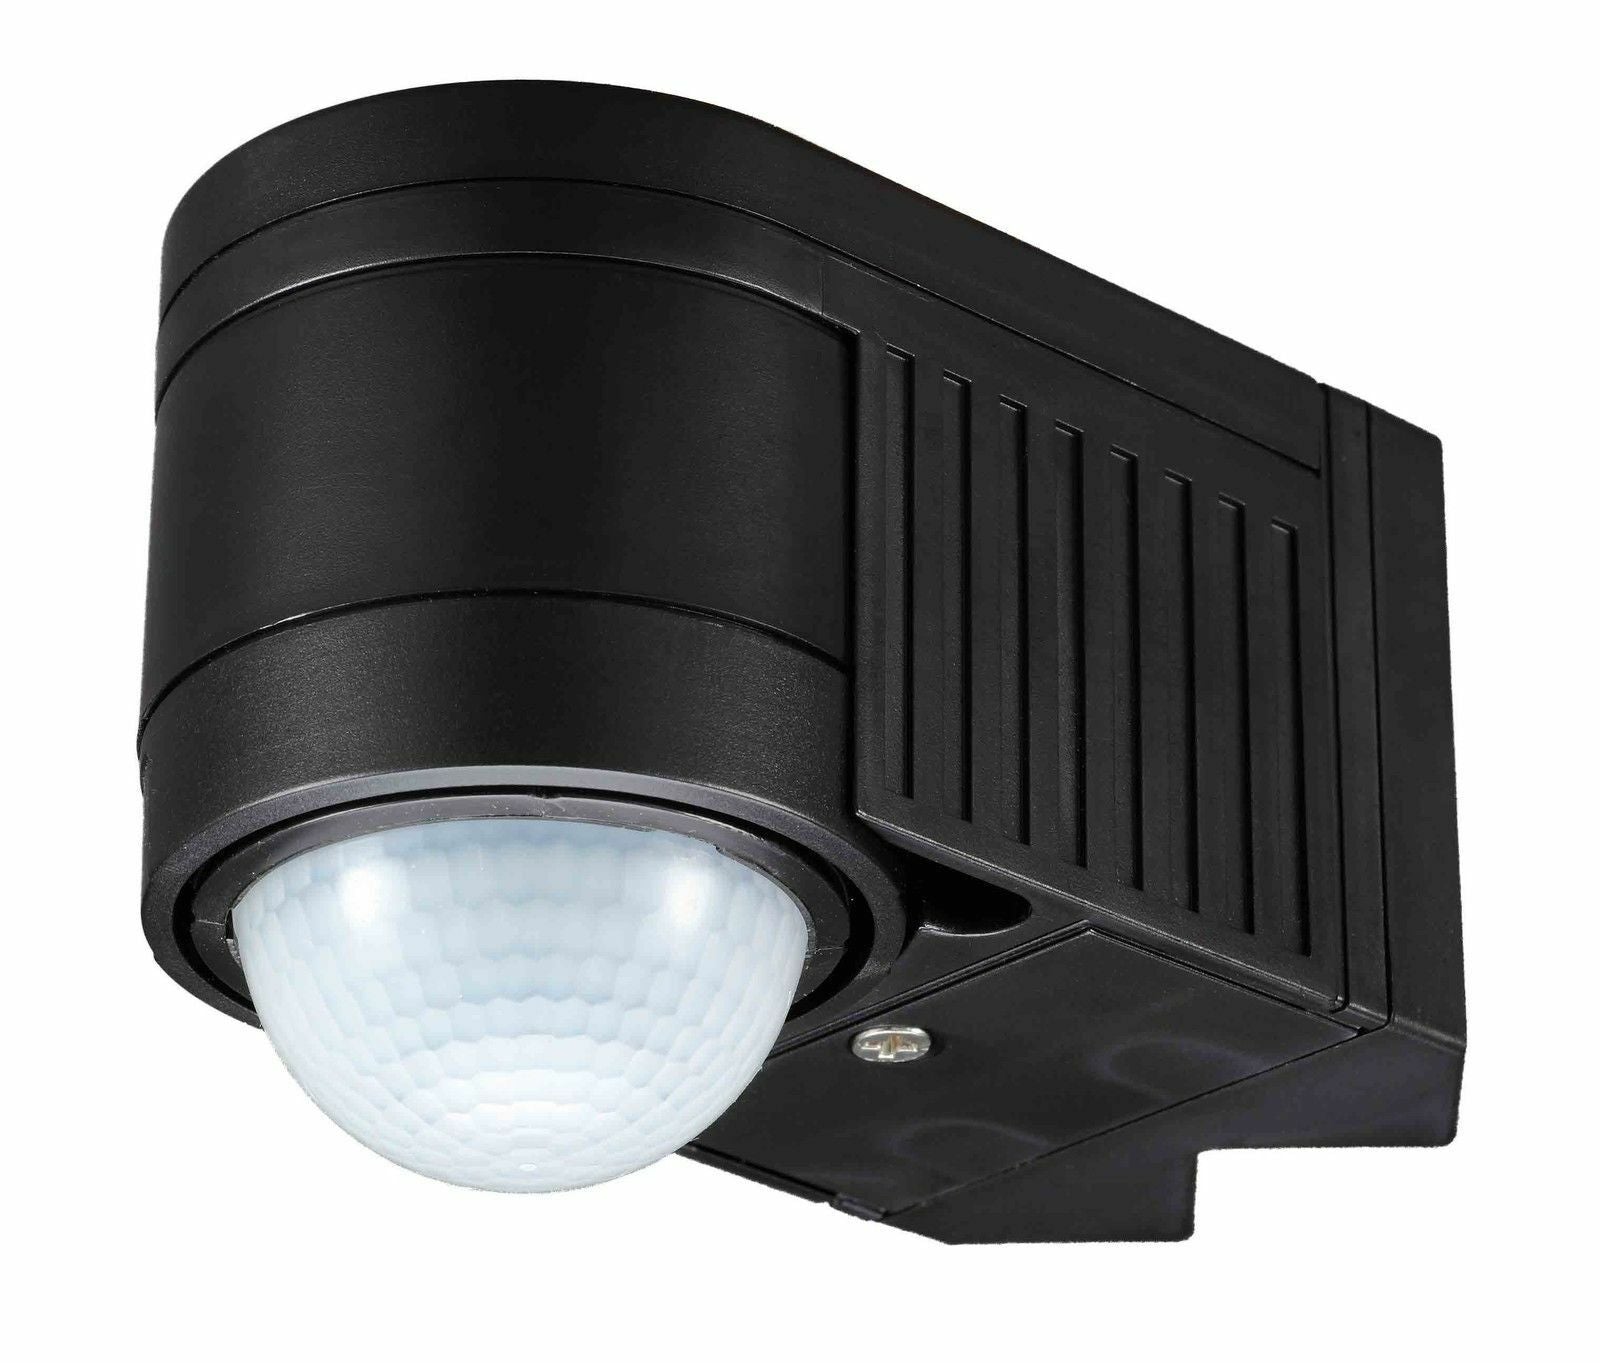 PIR Infrared Motion Sensor Black Outdoor 360 Degree NEW IP44 Certified UKEW